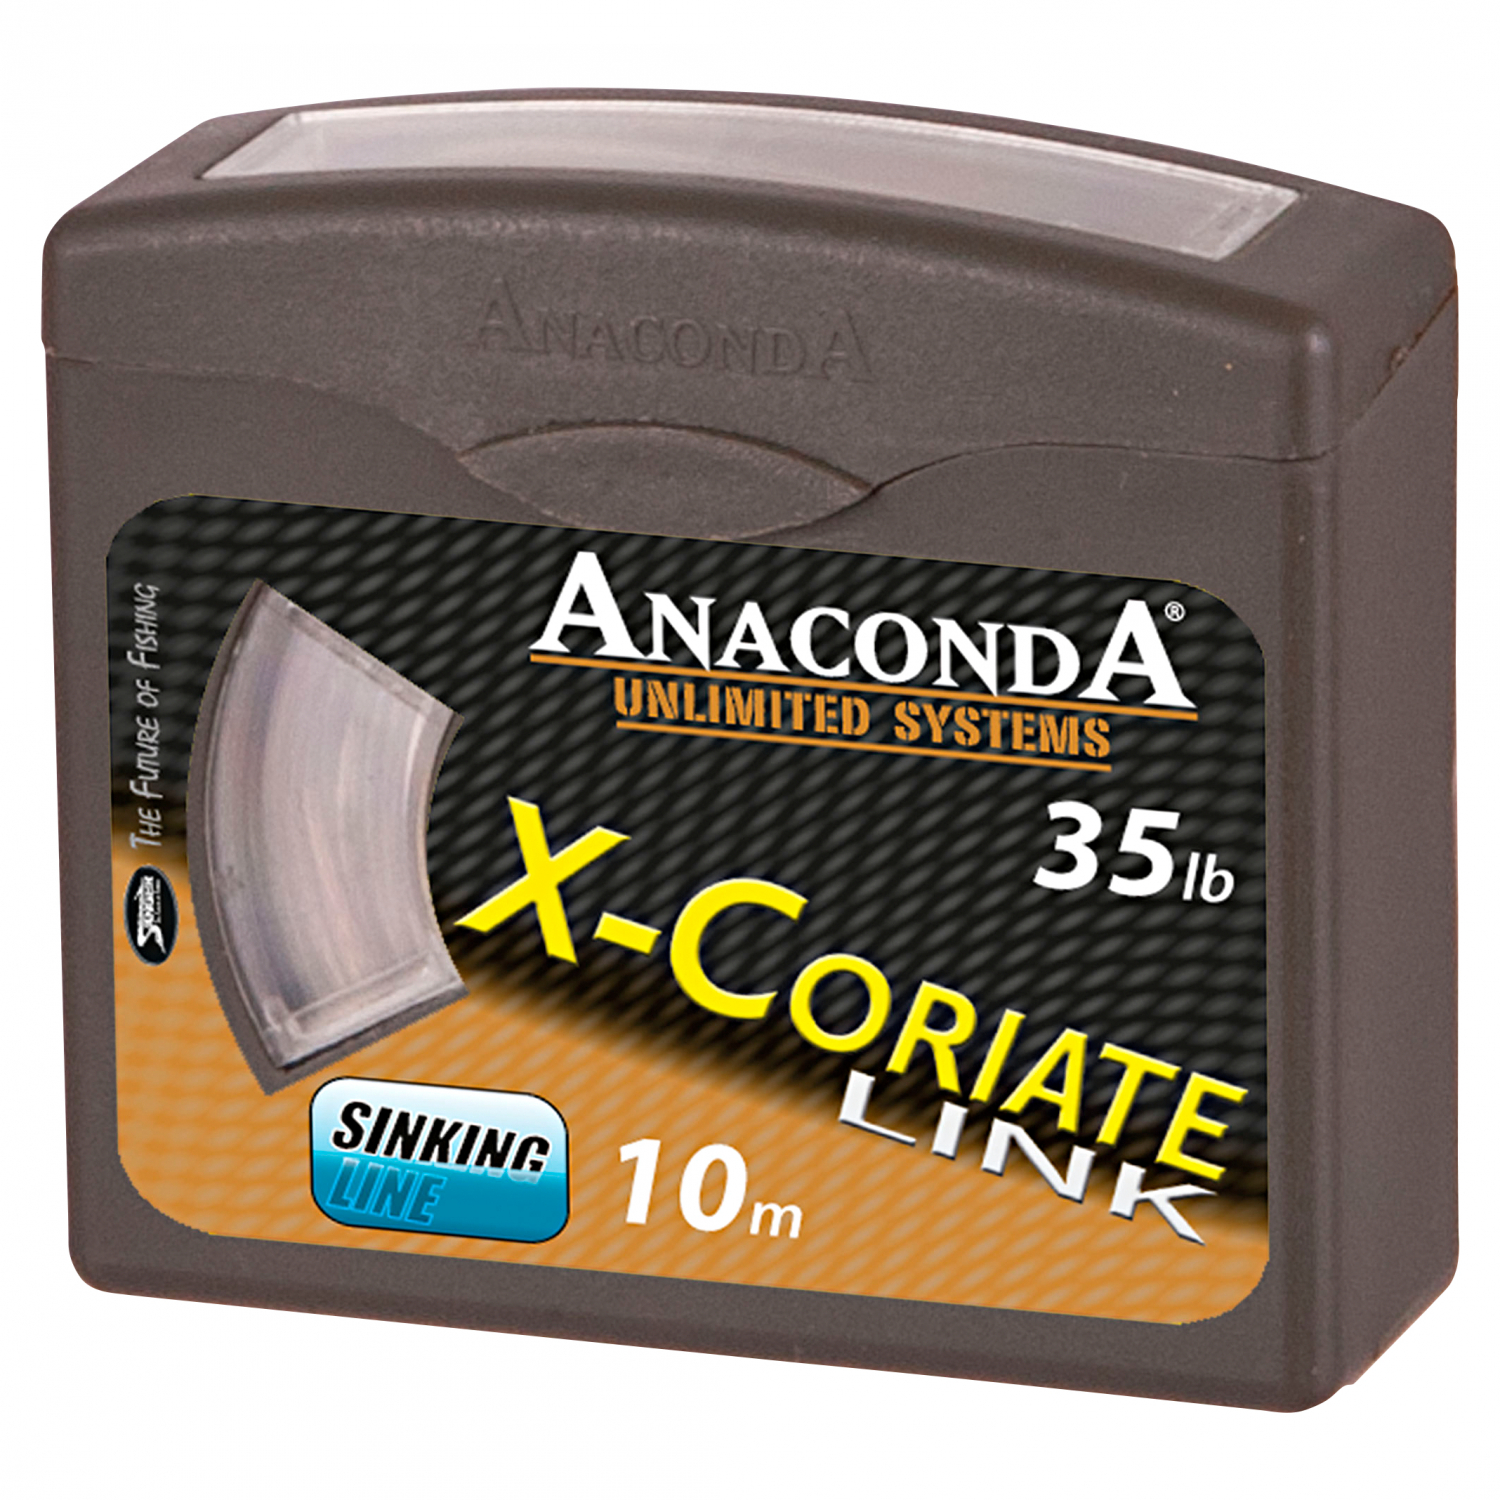 Anaconda Sänger Anaconda X-Coriate Link 